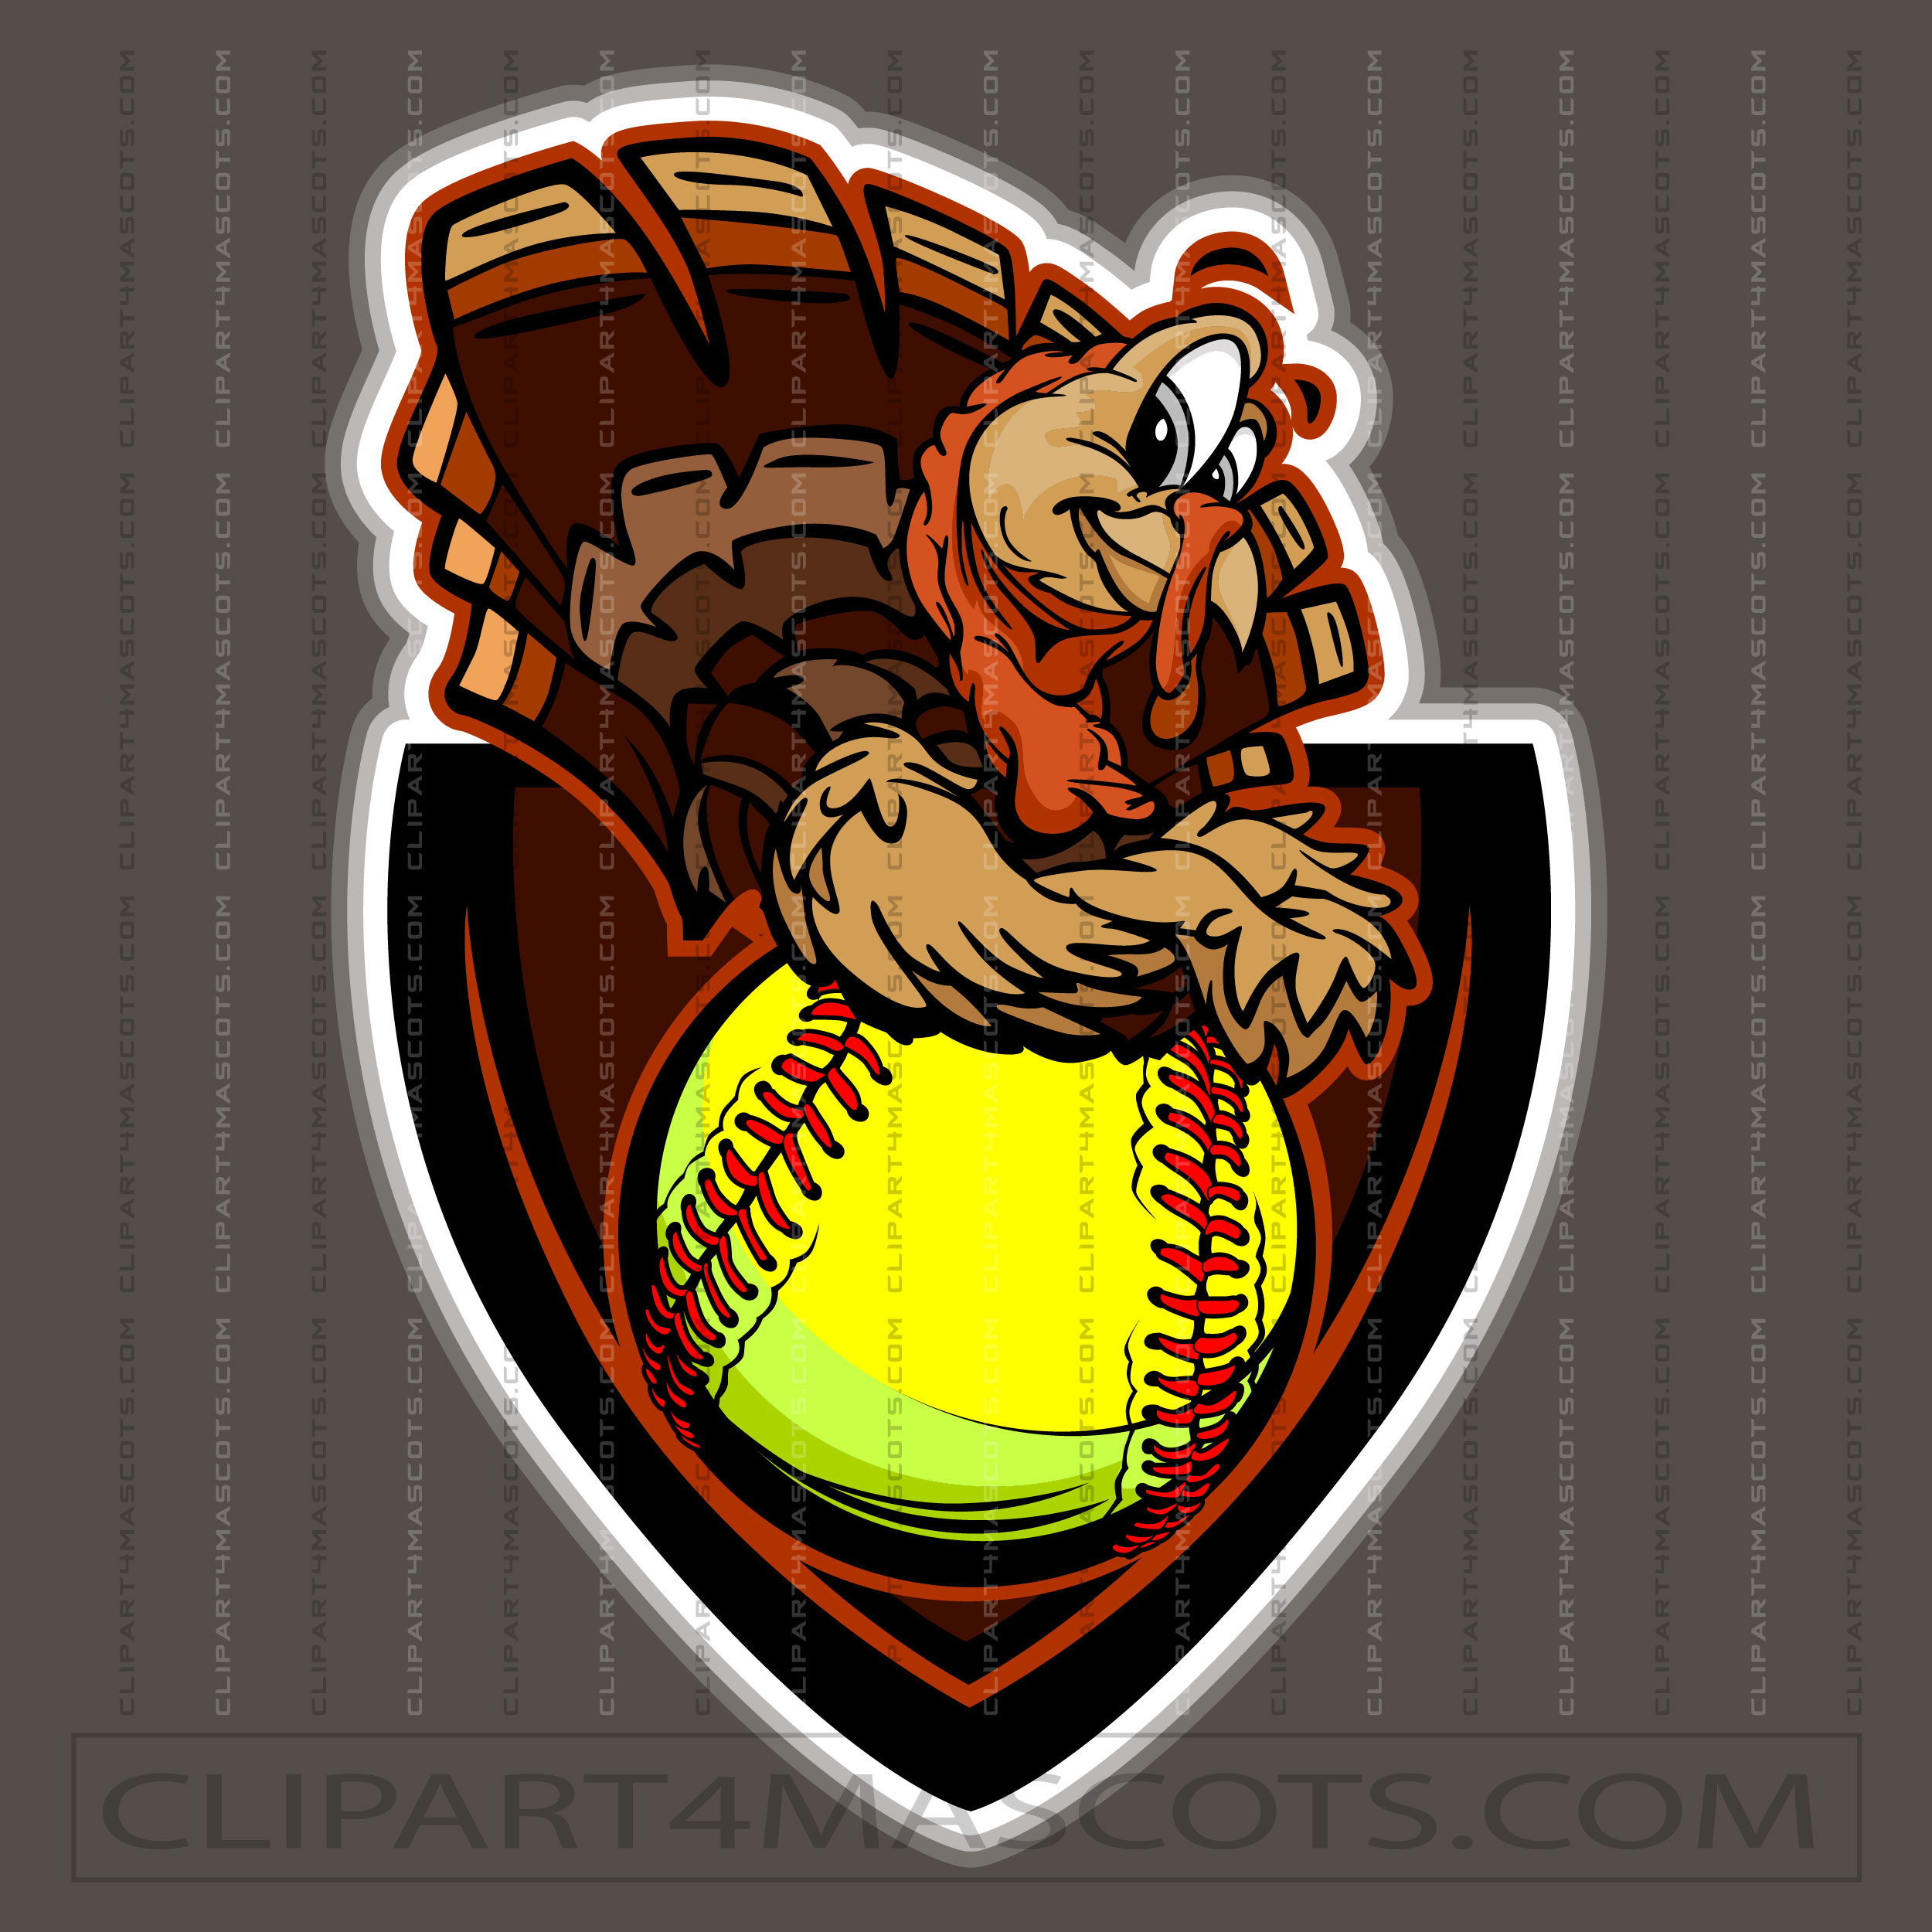 Thanksgiving Softball Logo